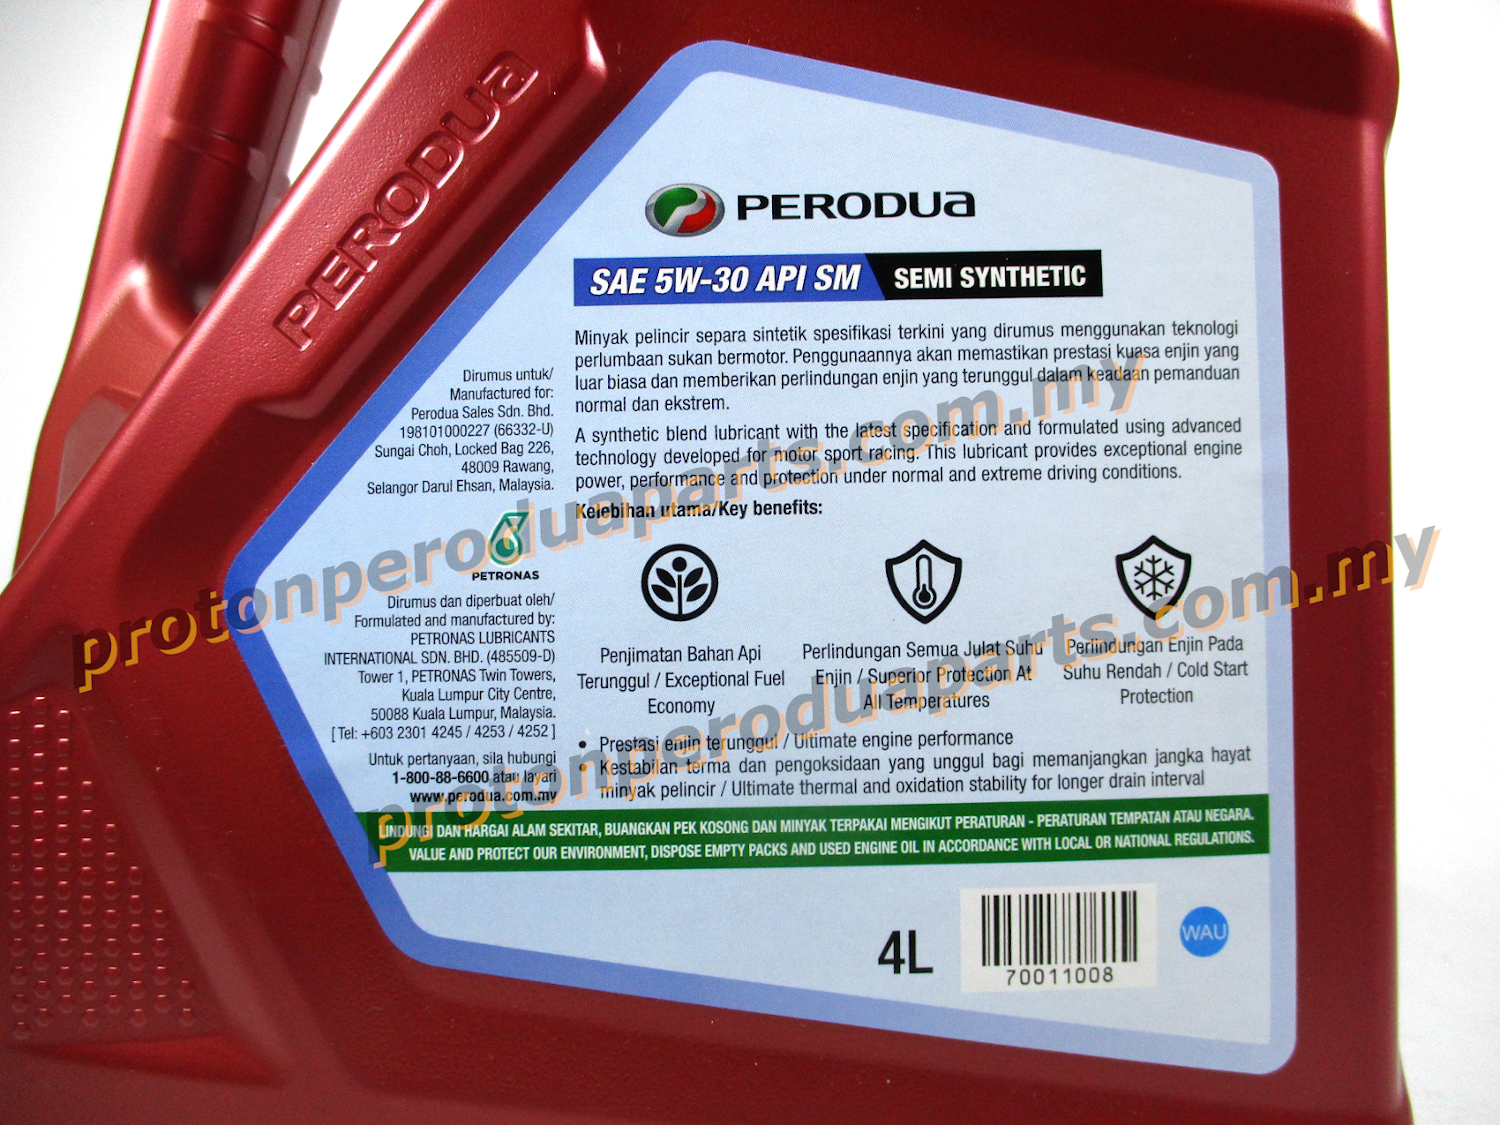 Perodua Engine Oil 5 30 Api Sm 5w 30 4 Litre Oil Filter Original Perodua Semi Synthetic Minyak Hitam Proton Perodua Parts Online Store For Proton And Perodua Car Spare Parts